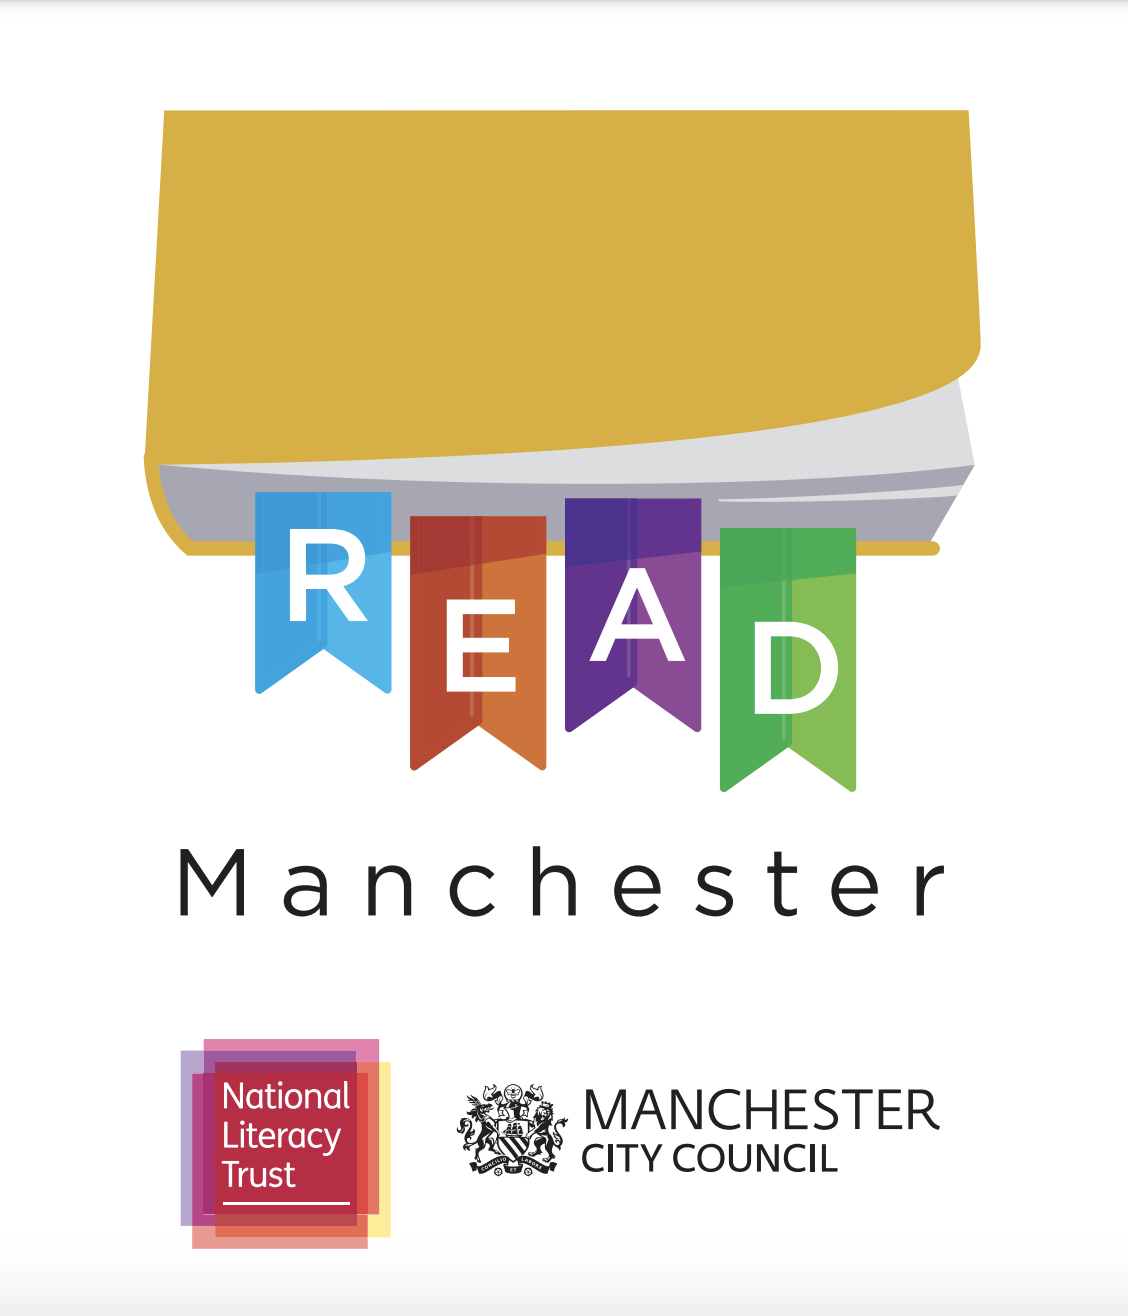 Read Manchester logo